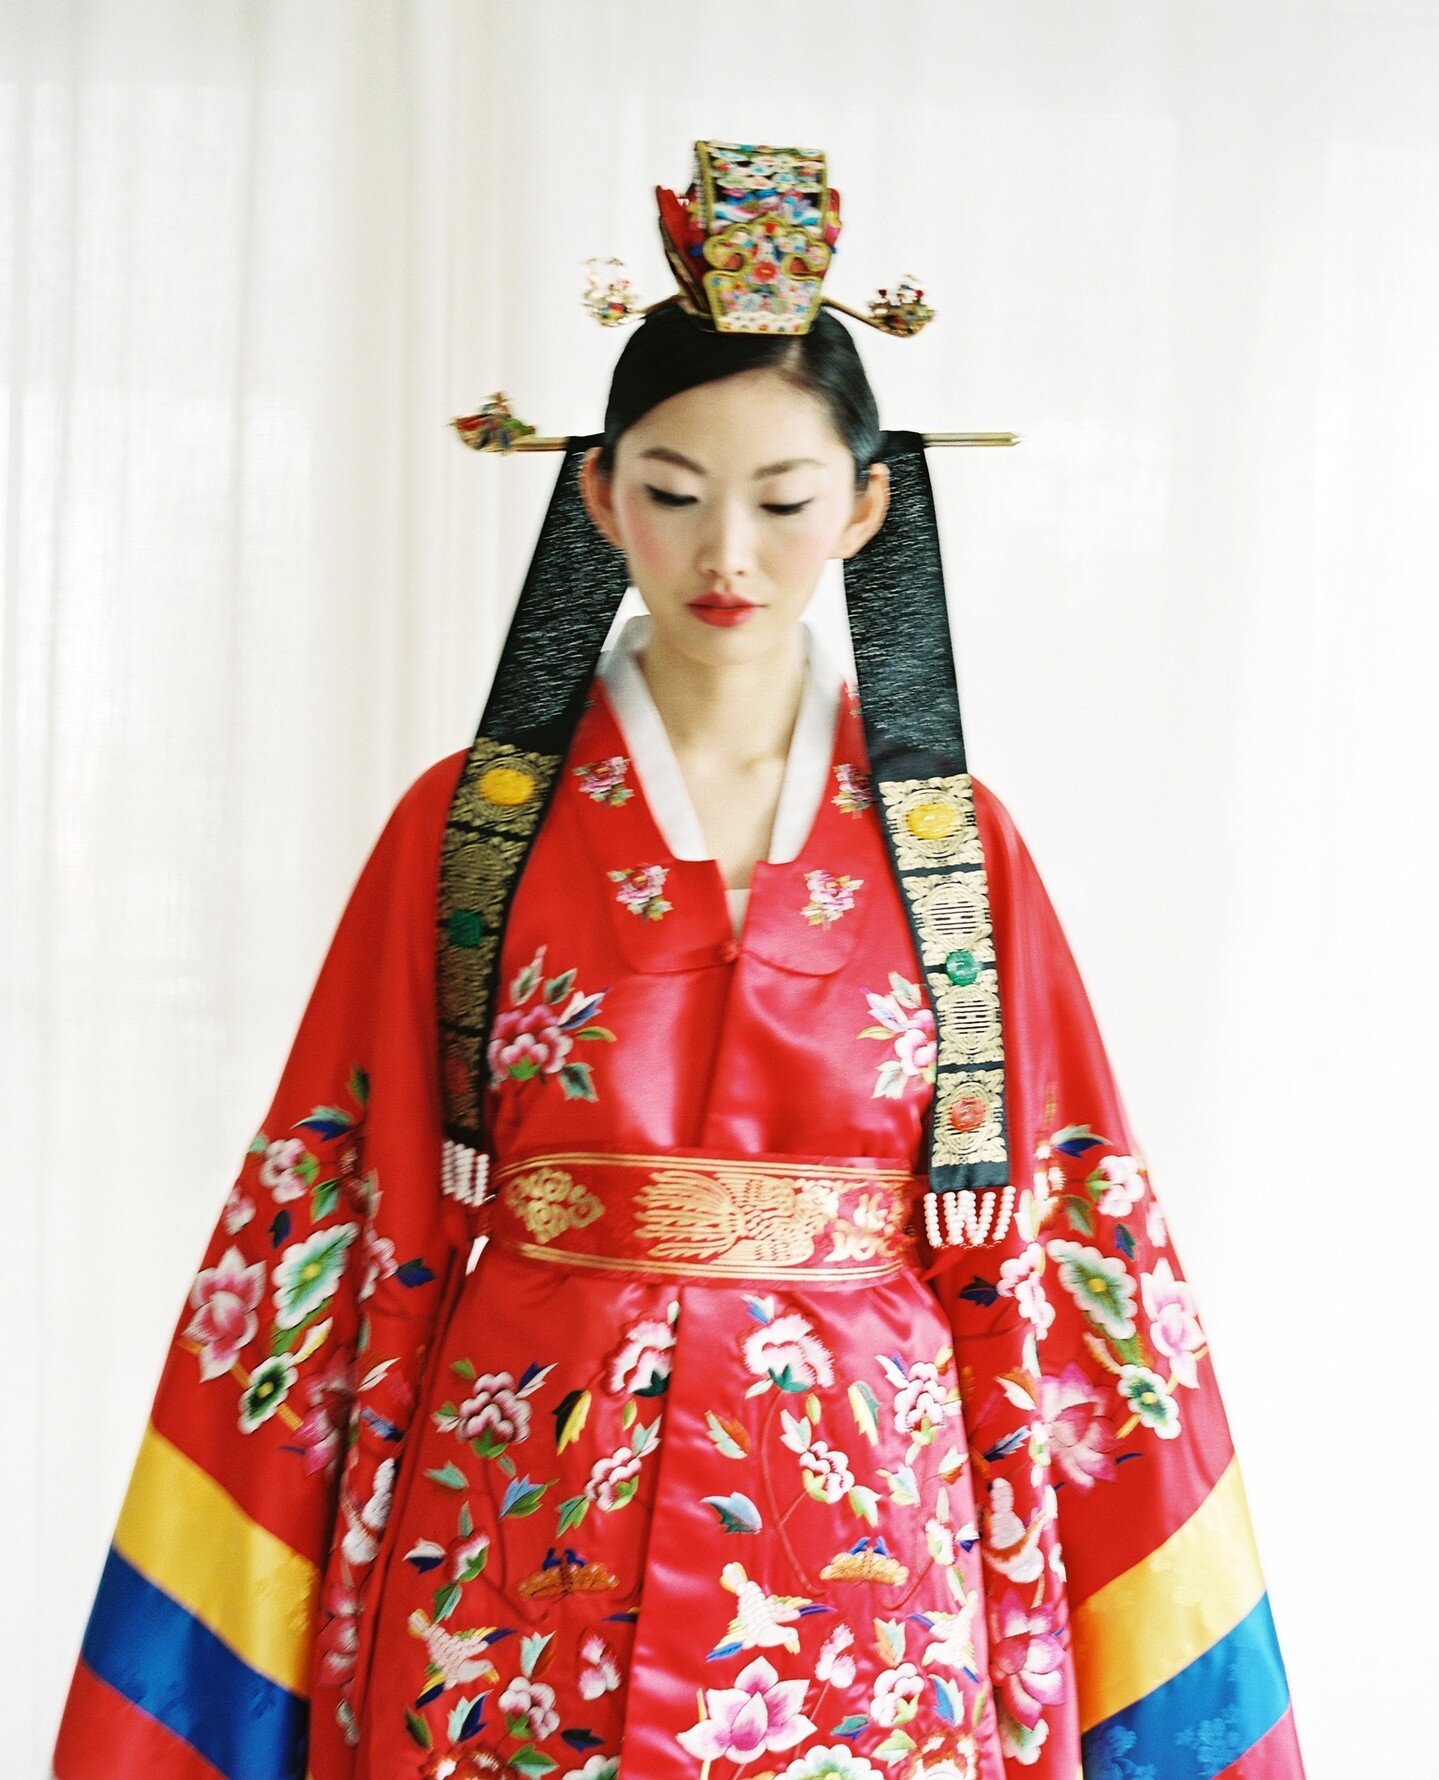 Beauty of Korean traditional outfit.⁠
⁠
⁠
⁠
Photo: @by_matthew of @clybymatthew @by_matthew || HMUA: @airhairandmakeup || Model: @sophiac19 || Design: @hazelduststudio || Outfits: @thehanbok⁠
⁠
#clybymatthew #matthewree⁠
#love #nyc #nycwedding #nycwe